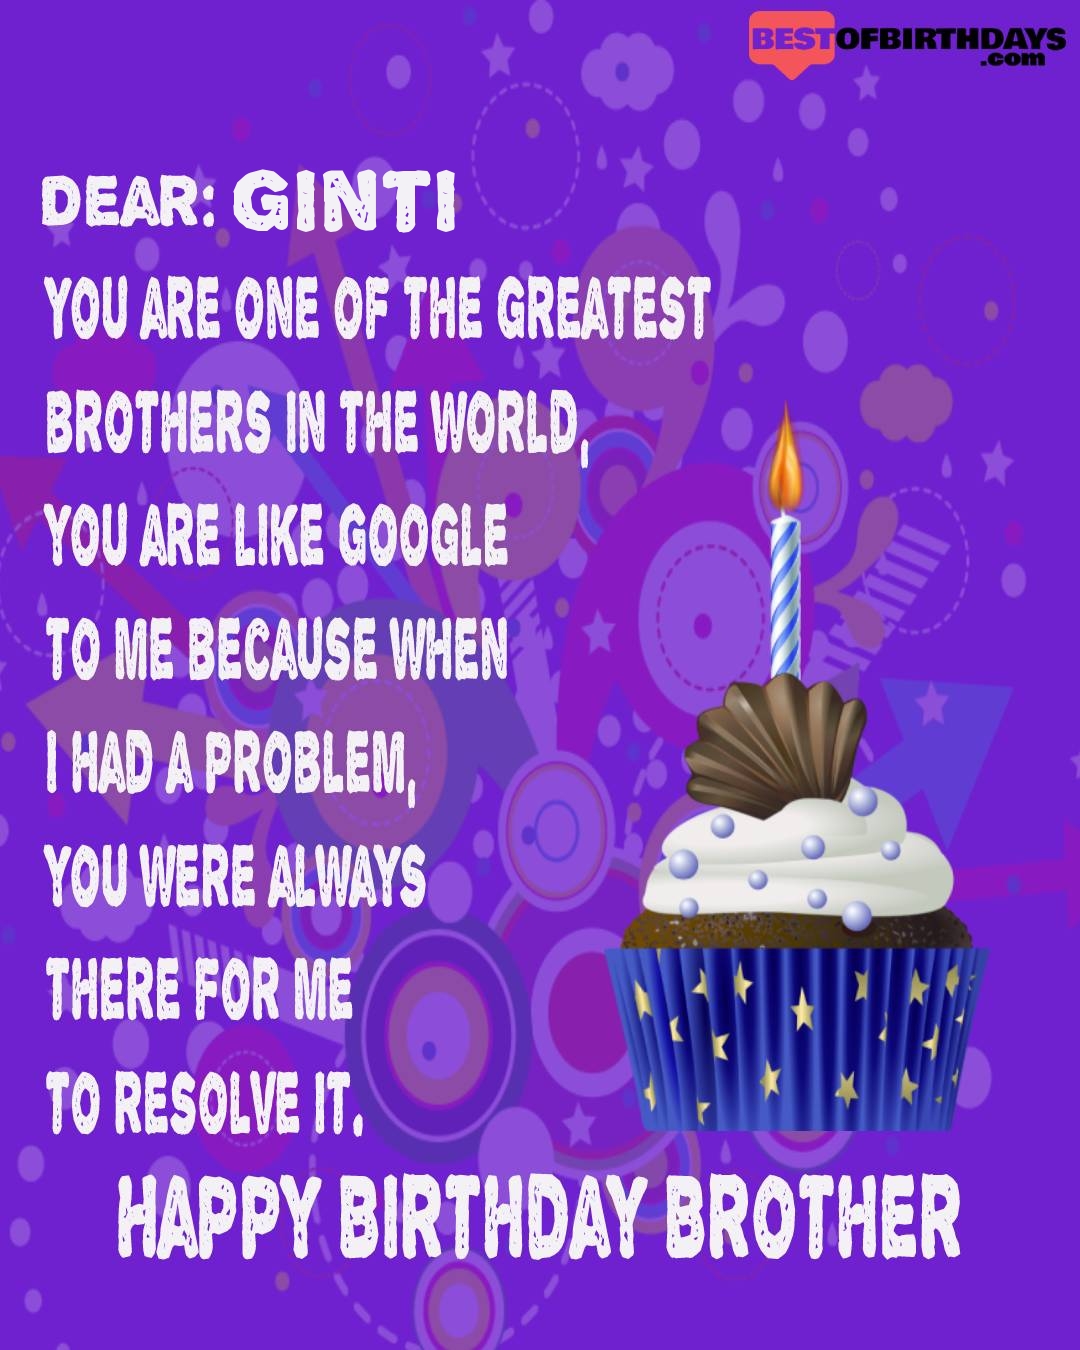 Happy birthday ginti bhai brother bro